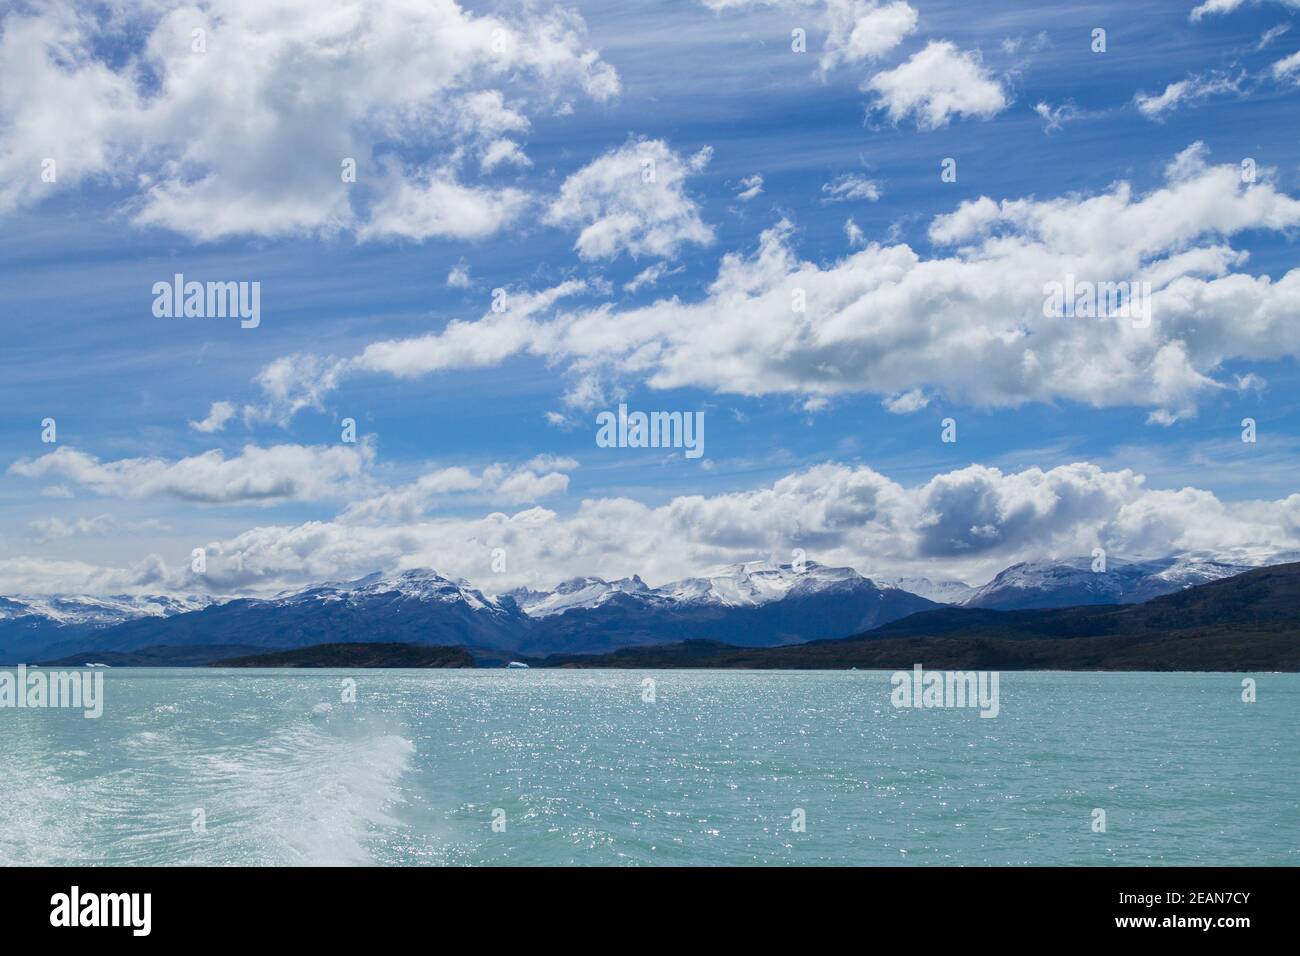 Navigation on Argentino lake, Patagonia landscape, Argentina Stock Photo